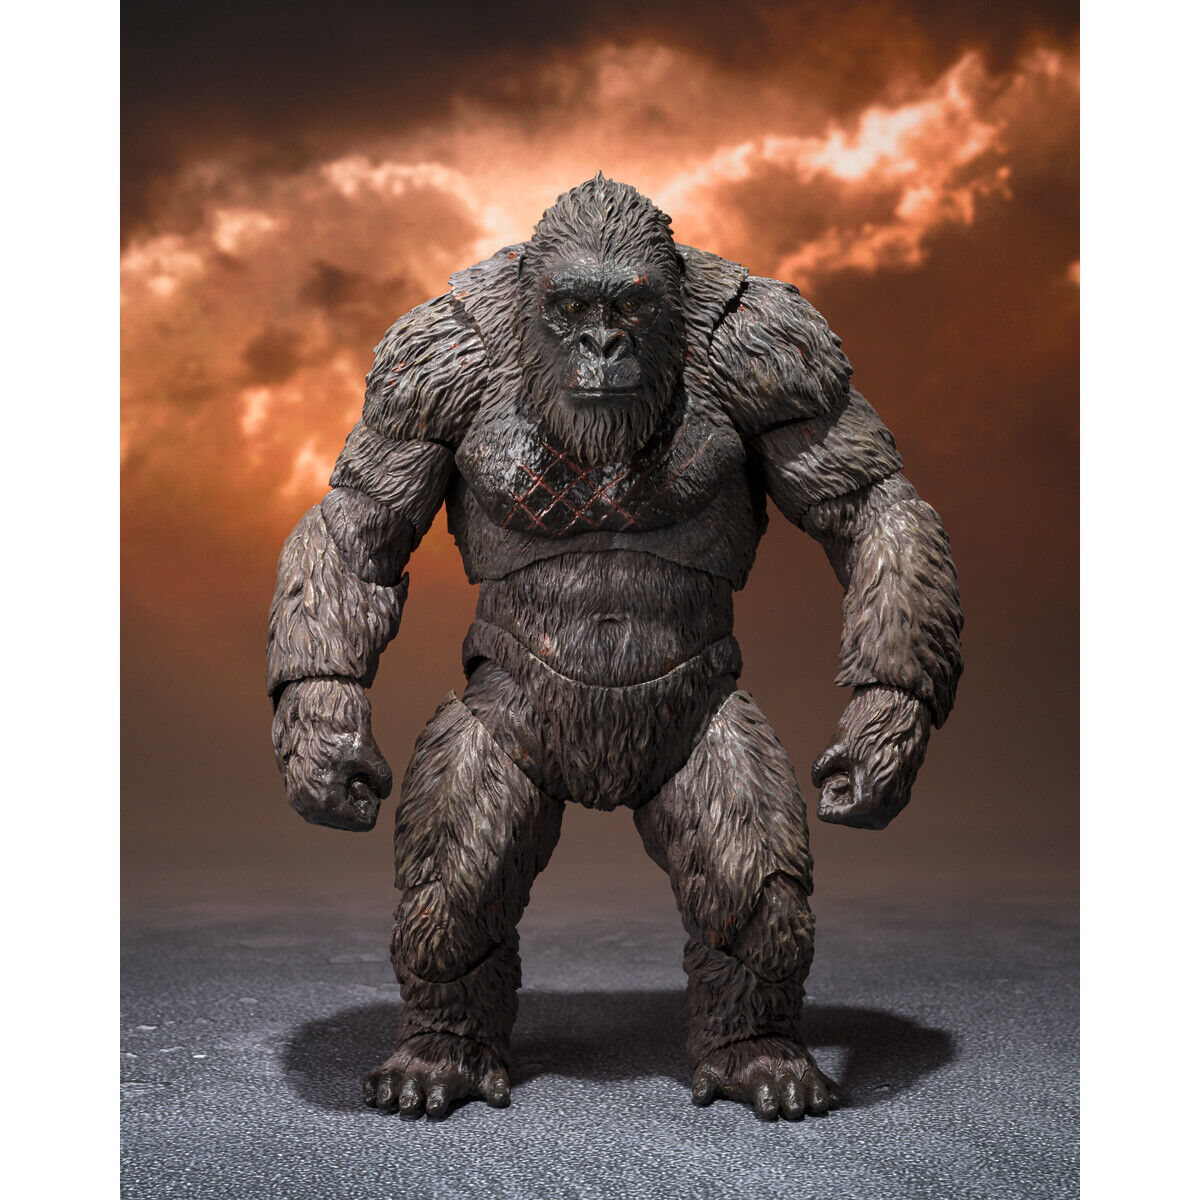 [PRE-ORDER] S.H.MonsterArts Kong From Godzilla Vs. Kong (2021) Exclusive Edition